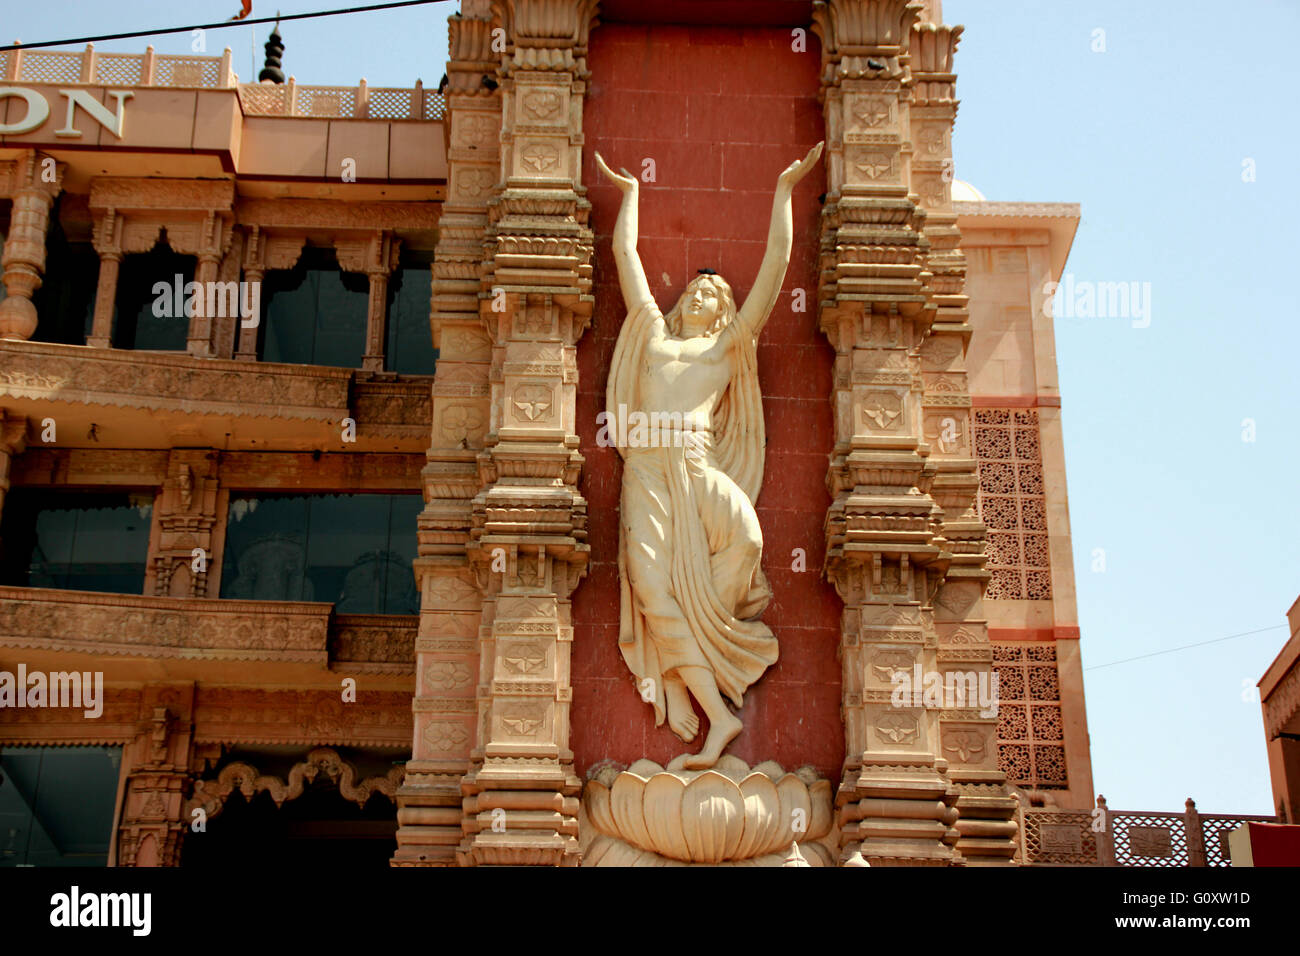 ISKCON temple Noida, Uttar Pradesh, India, magnificent temple dedicated to Lord Krishna with Golden chariot on raised platform Stock Photo